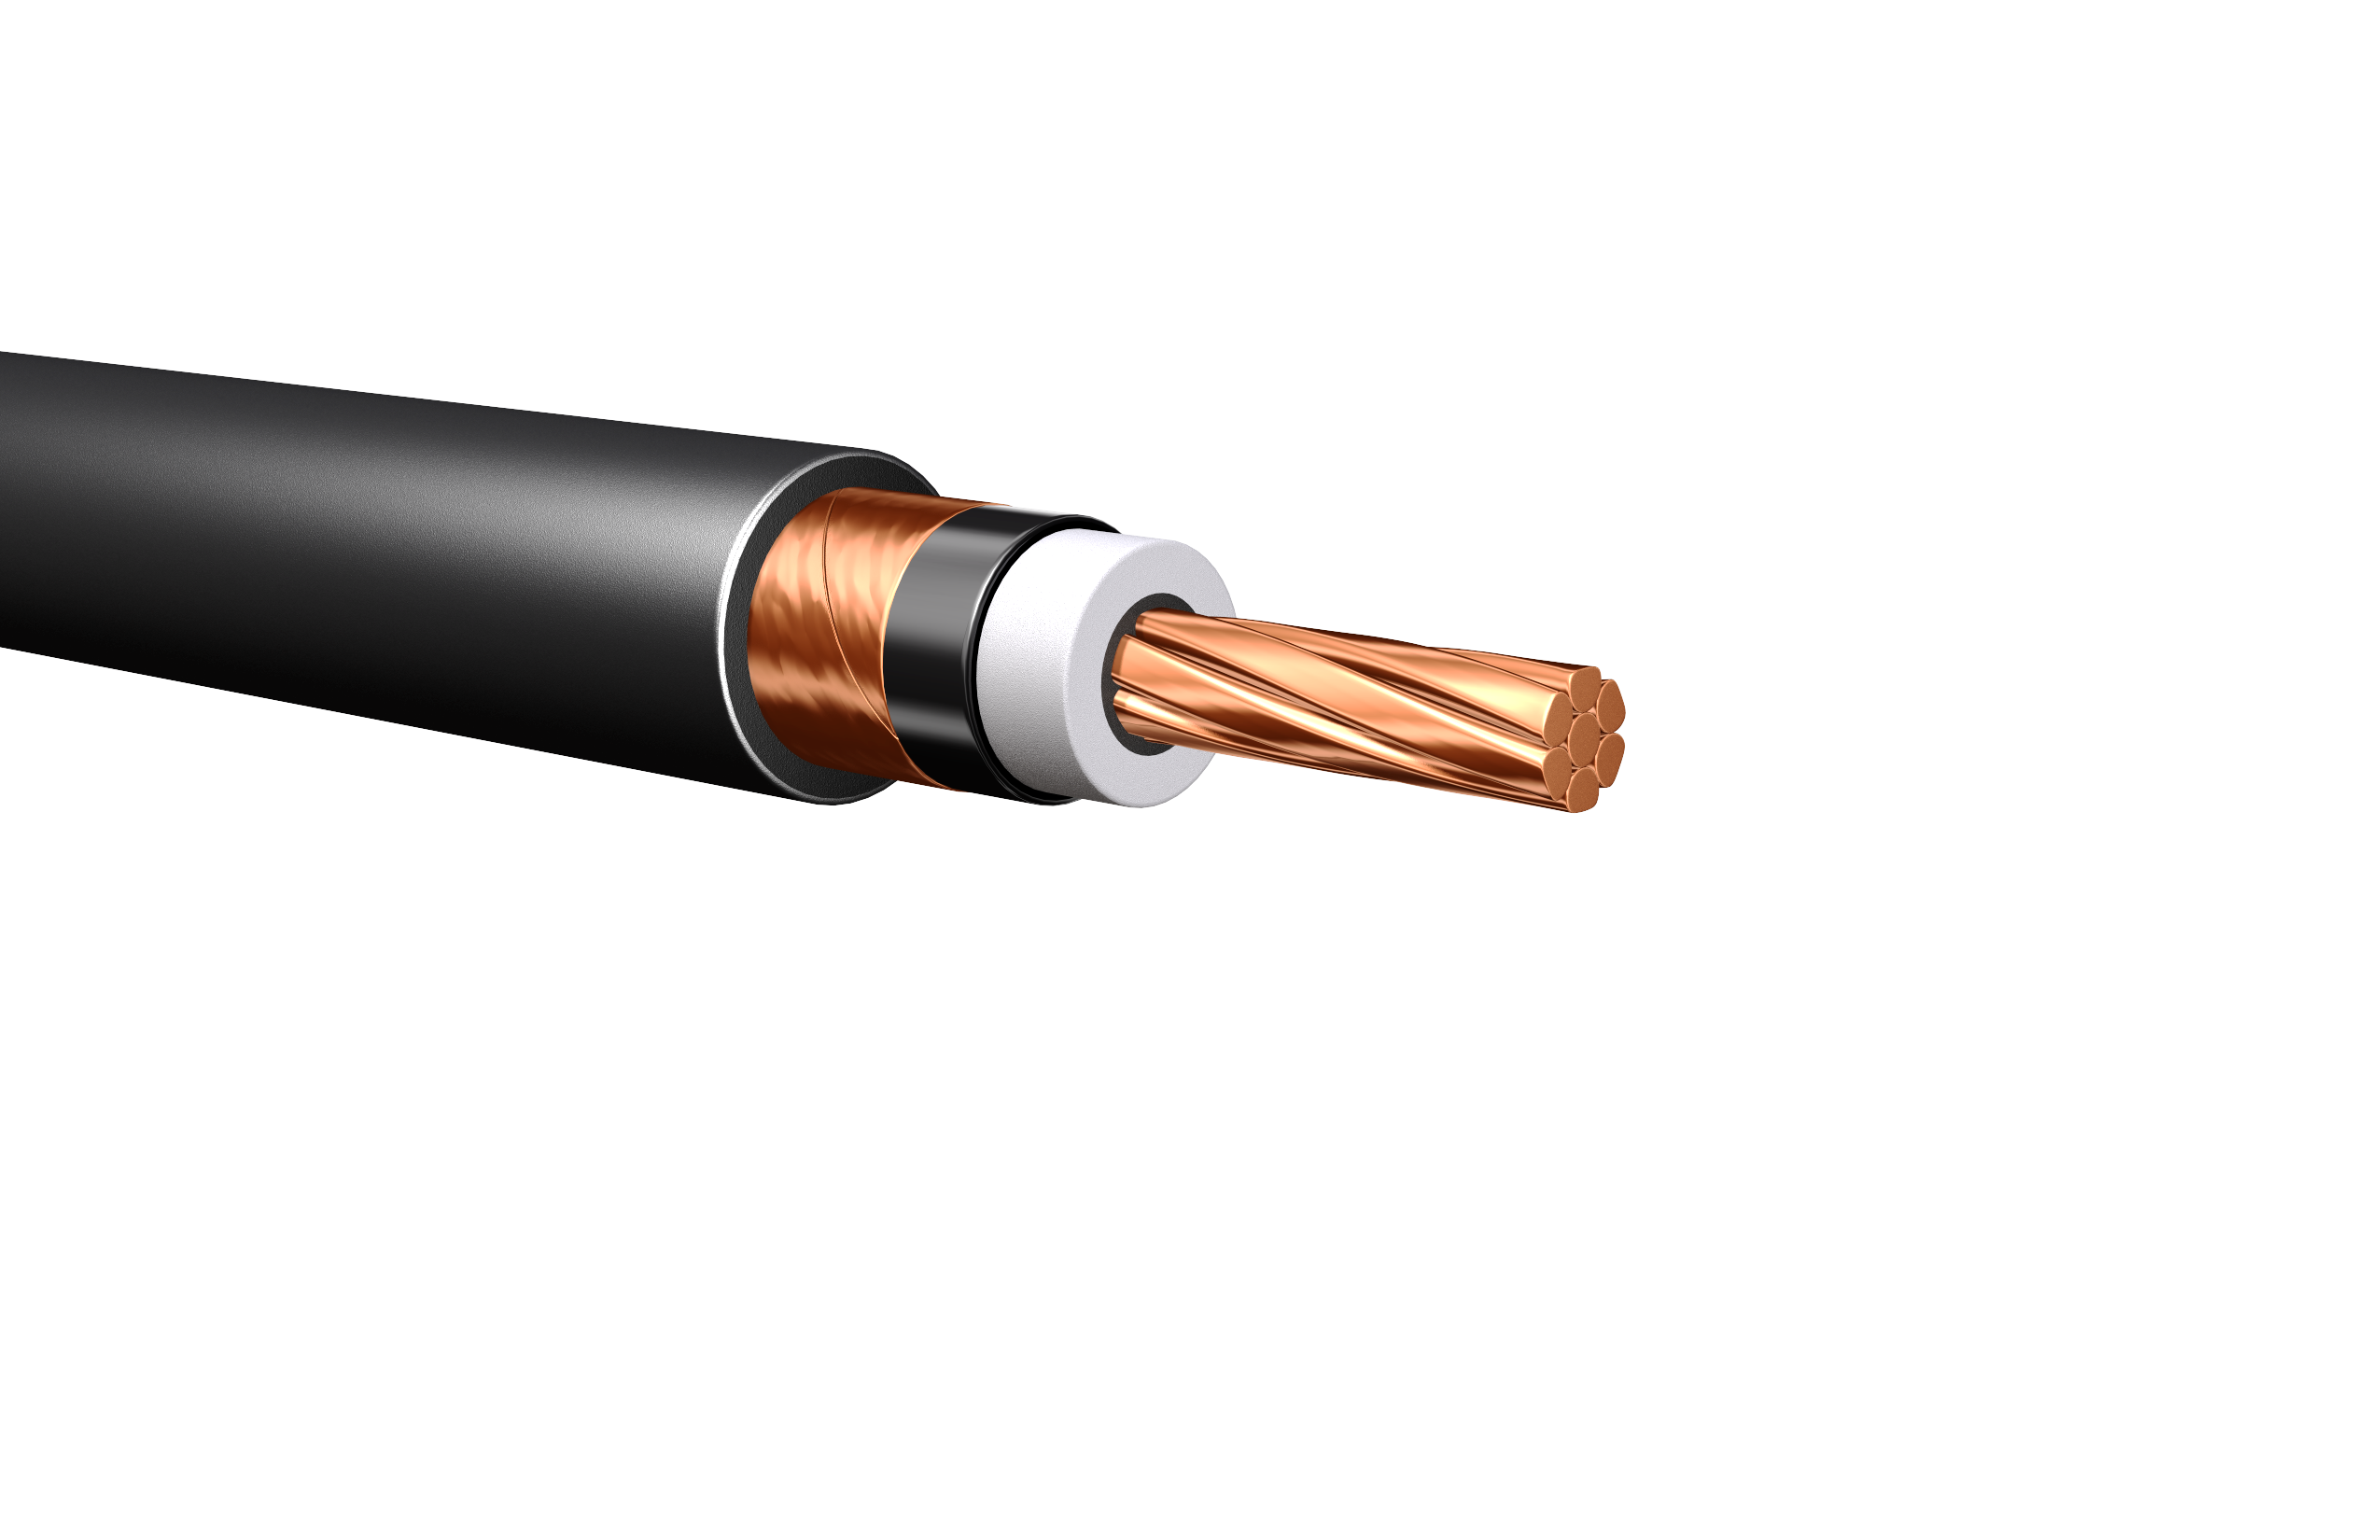 Eland Alternative PUR Spreader LV Reeling Cable 6 Core 0.6/1kv